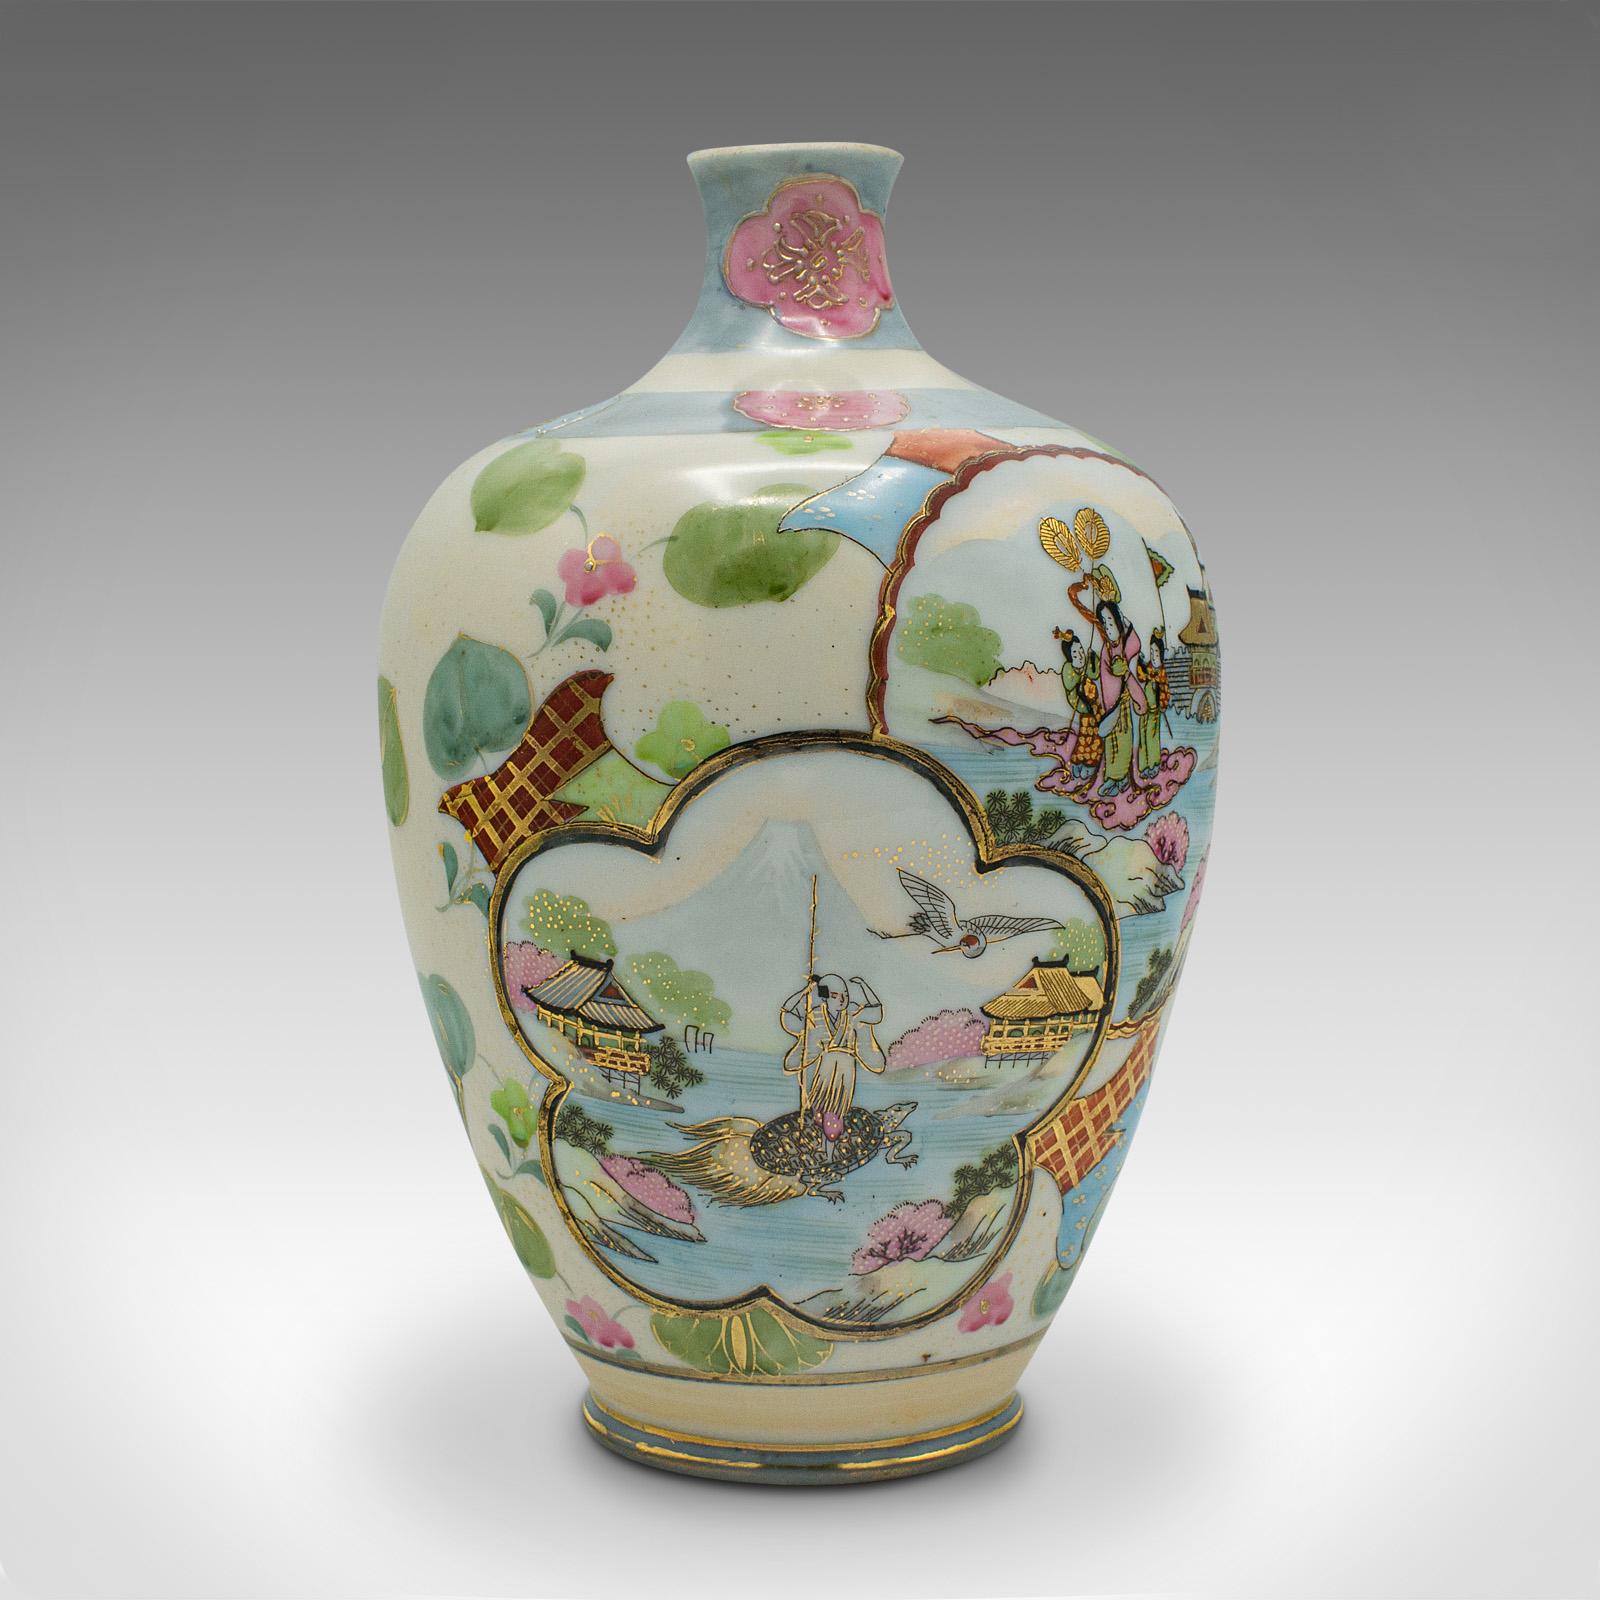 Vintage Decorative Posy Vase, Japanese, Ceramic, Flower Urn, Noritake, Art Deco In Good Condition For Sale In Hele, Devon, GB